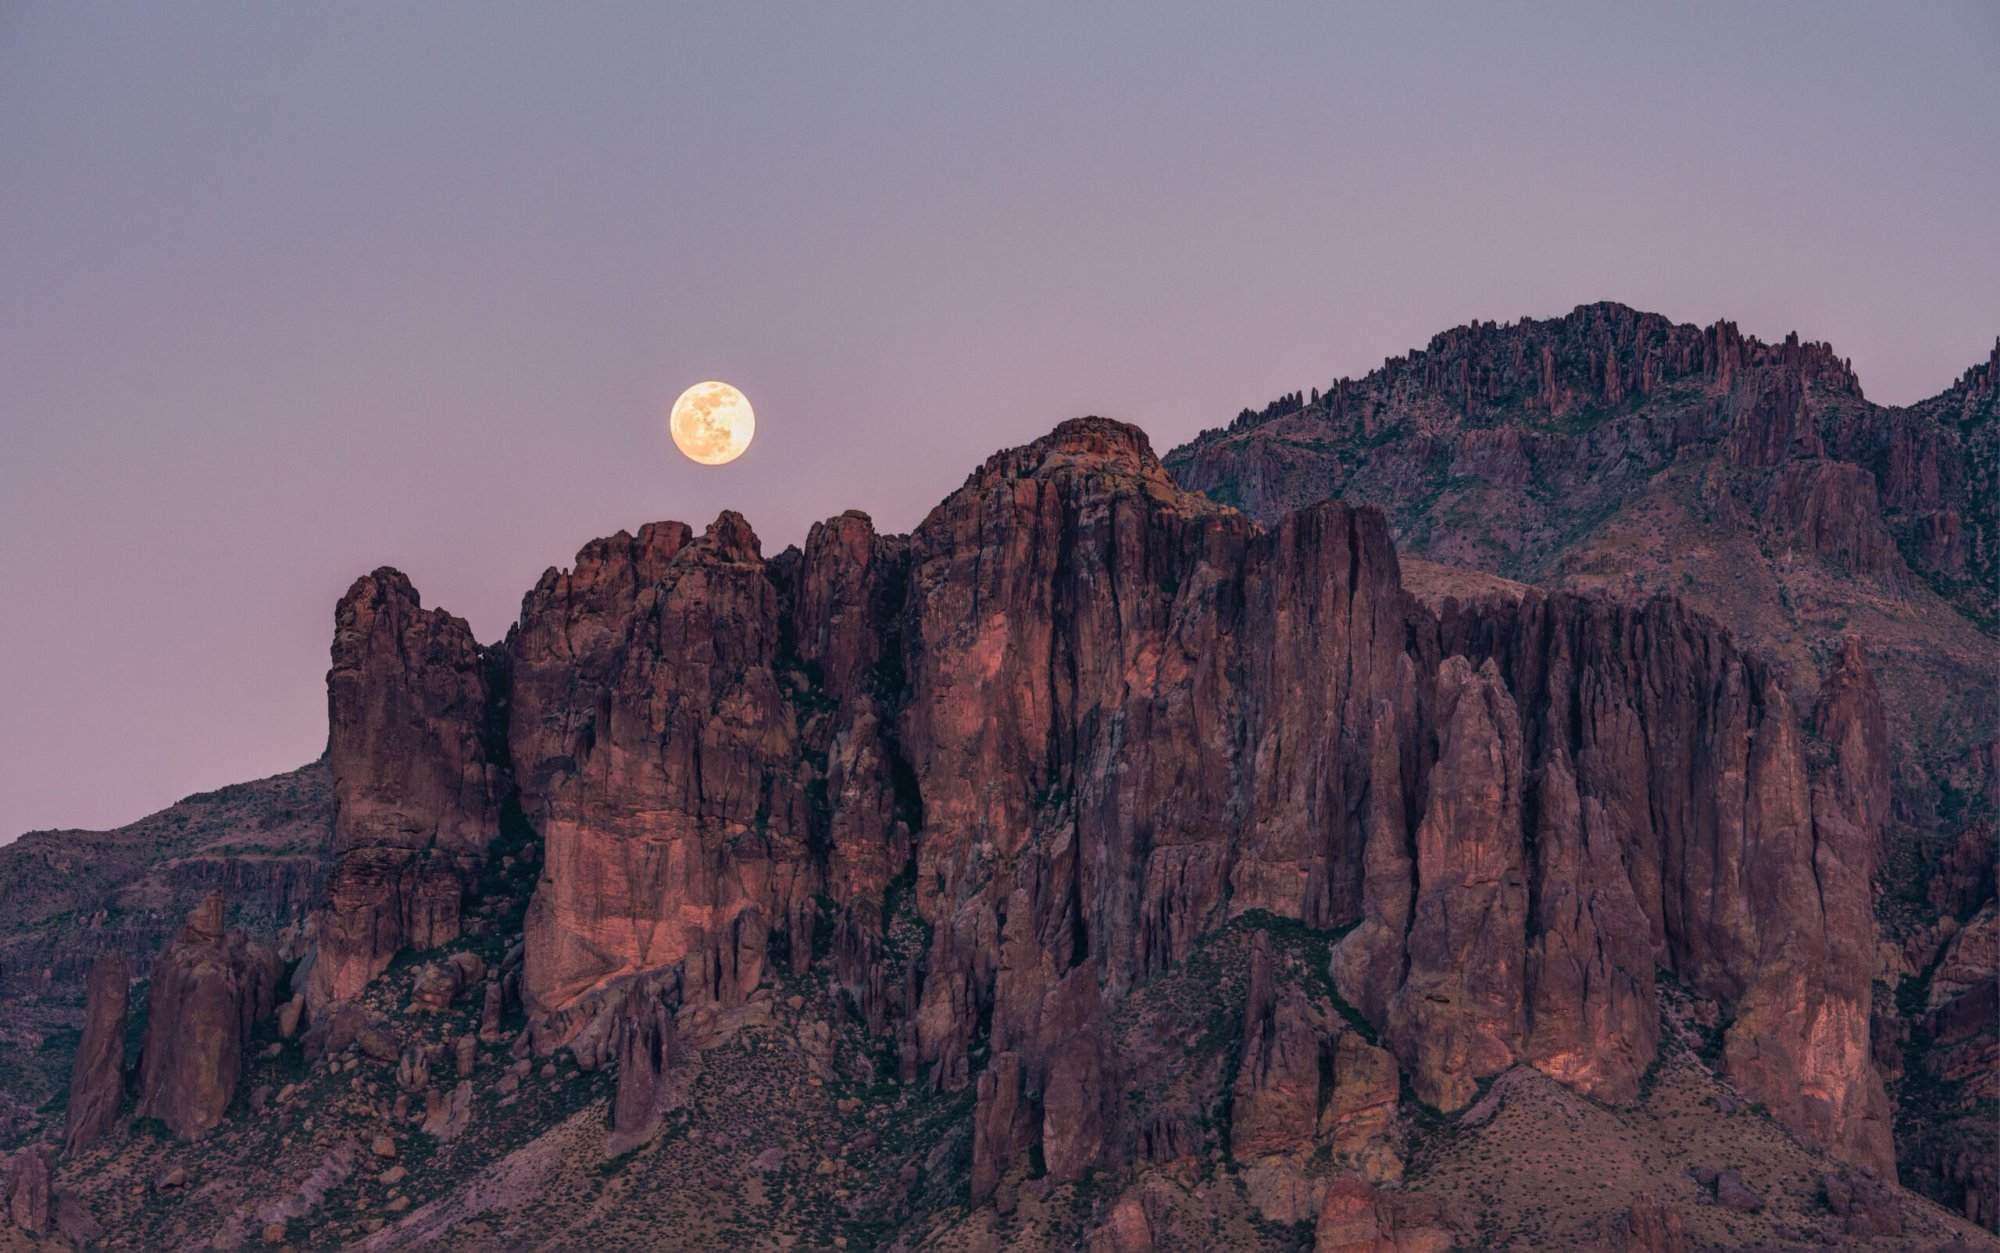 Moonrise at apache junction in Arizona